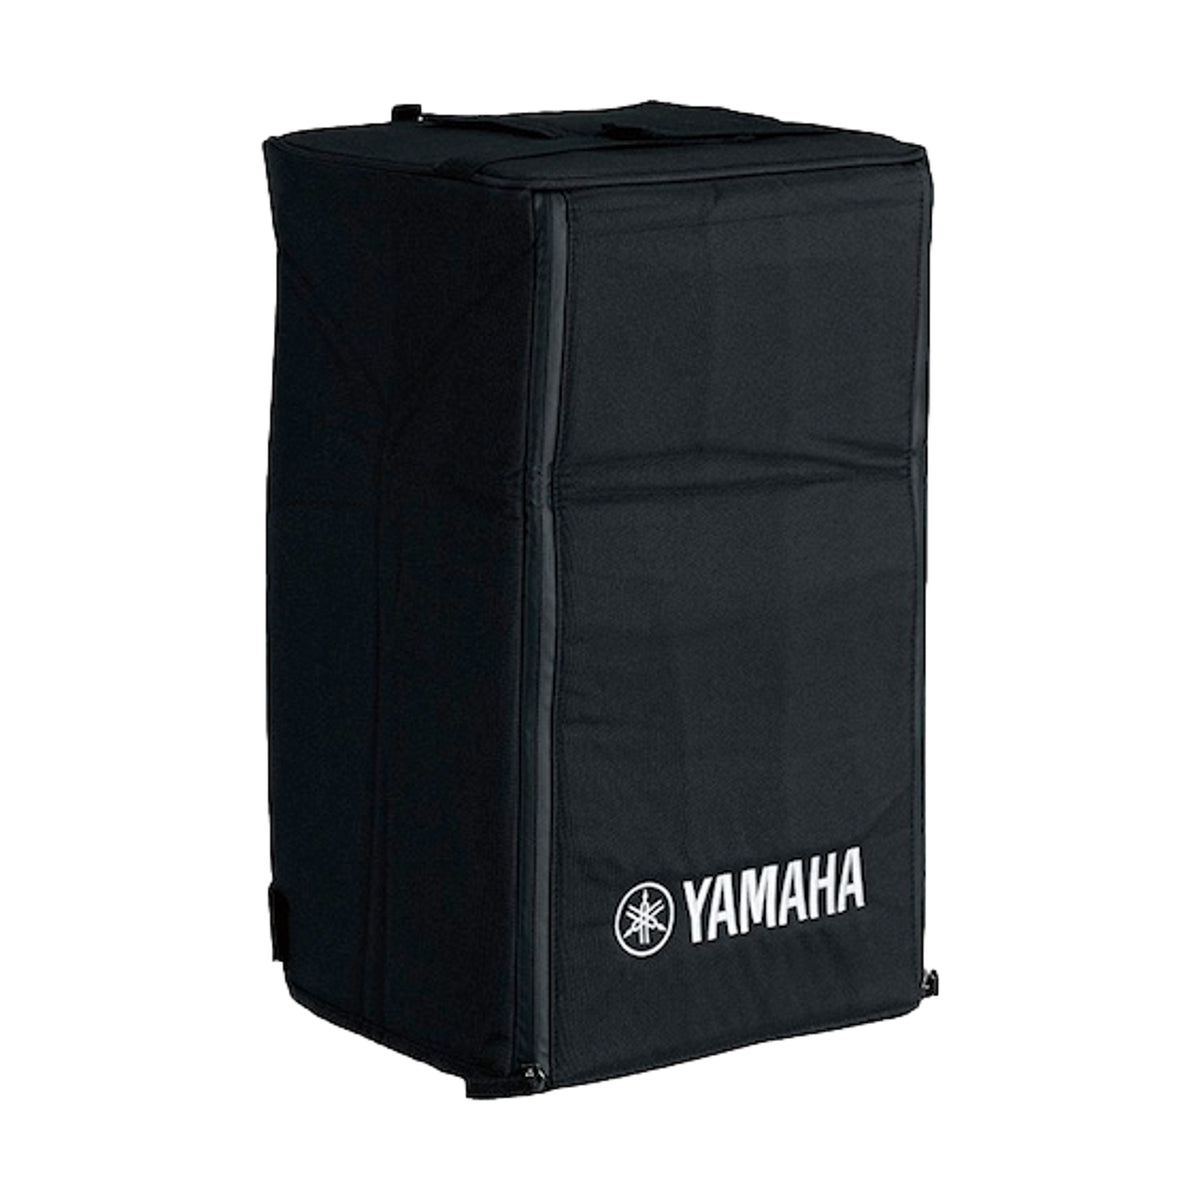 Yamaha 10 Inch Speaker Bag SPCVR-1001